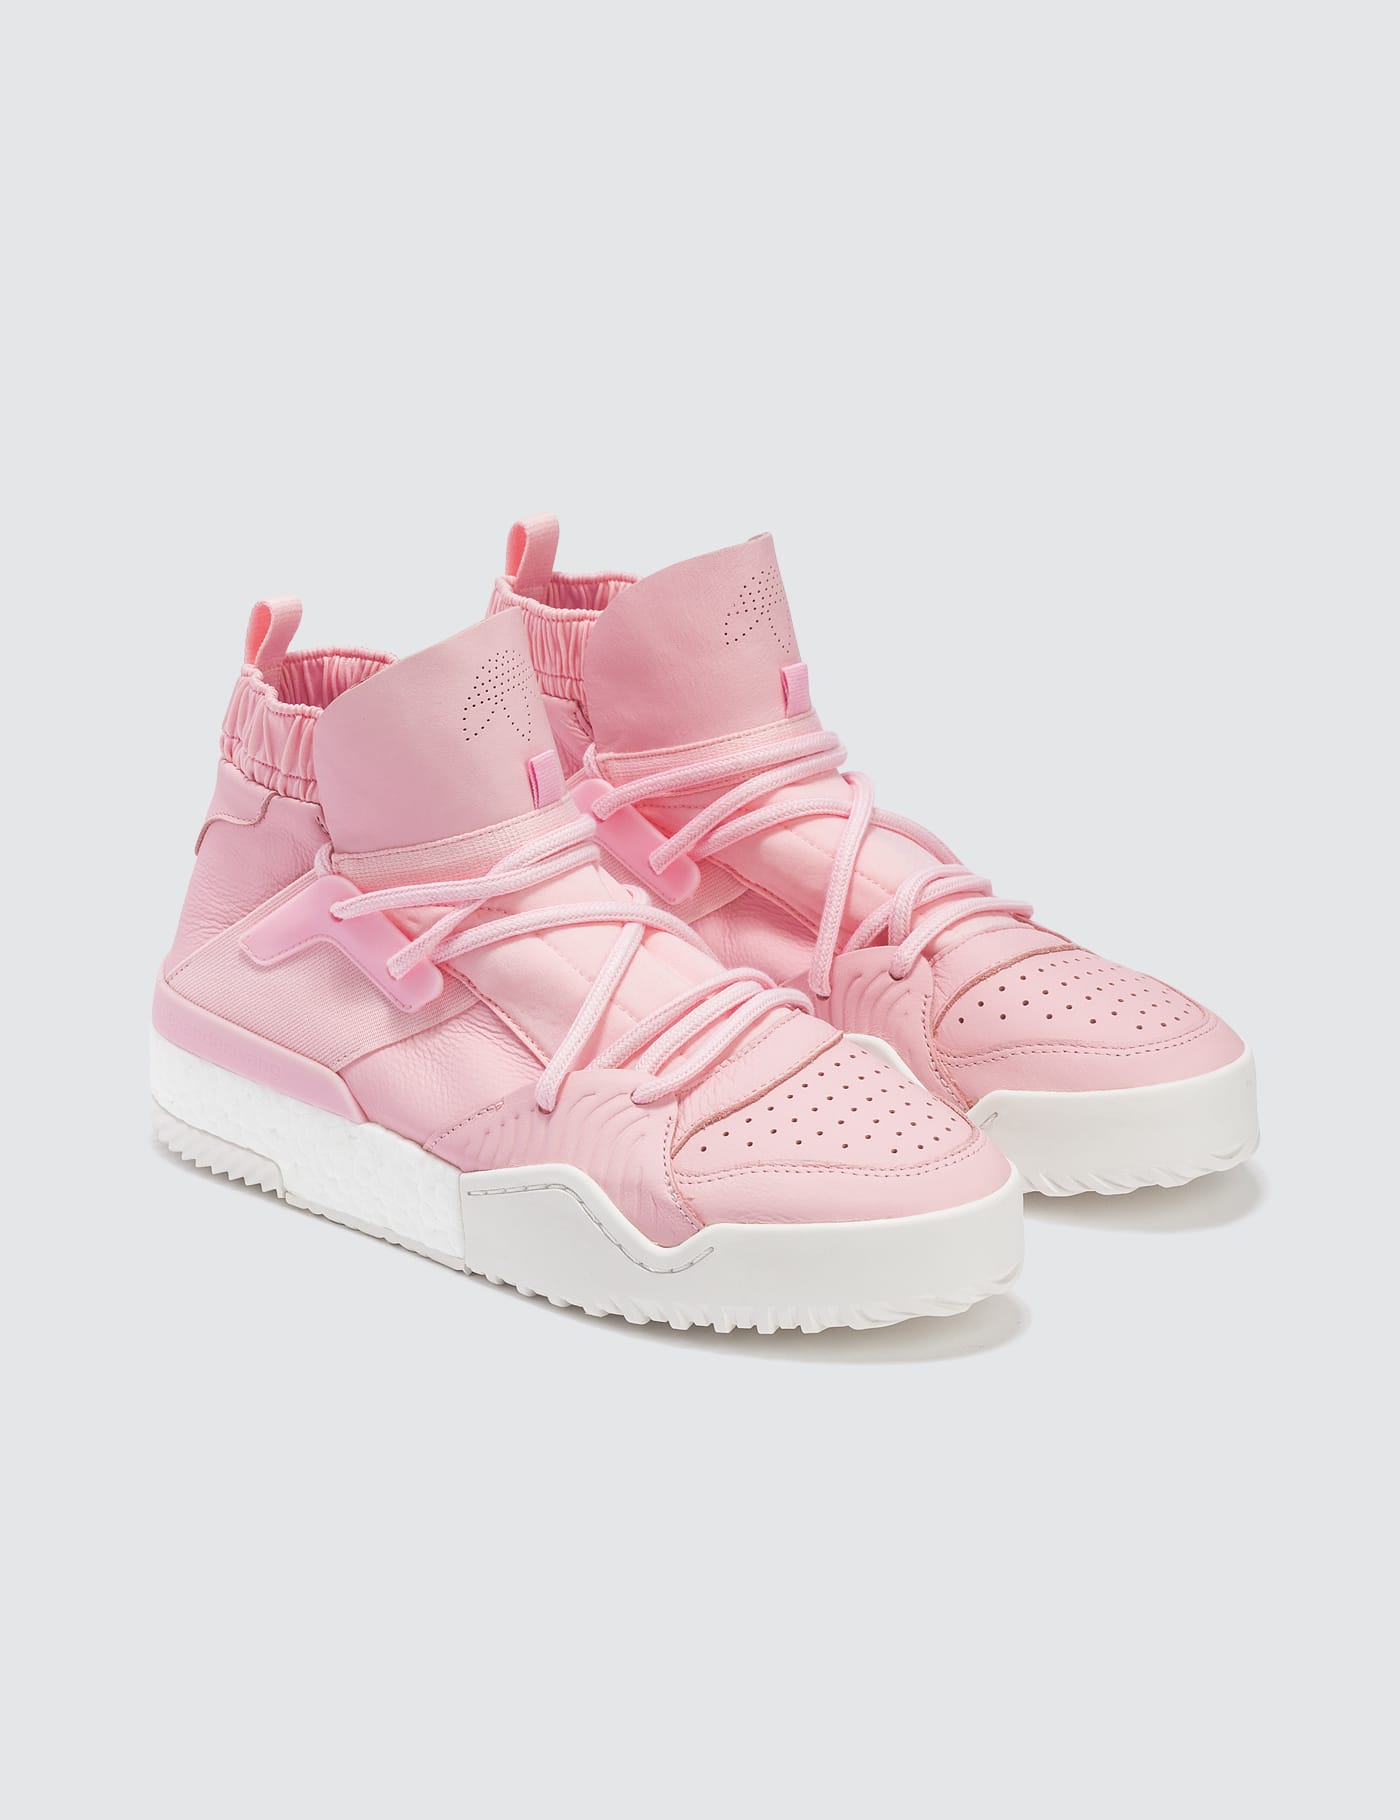 alexander wang adidas pink